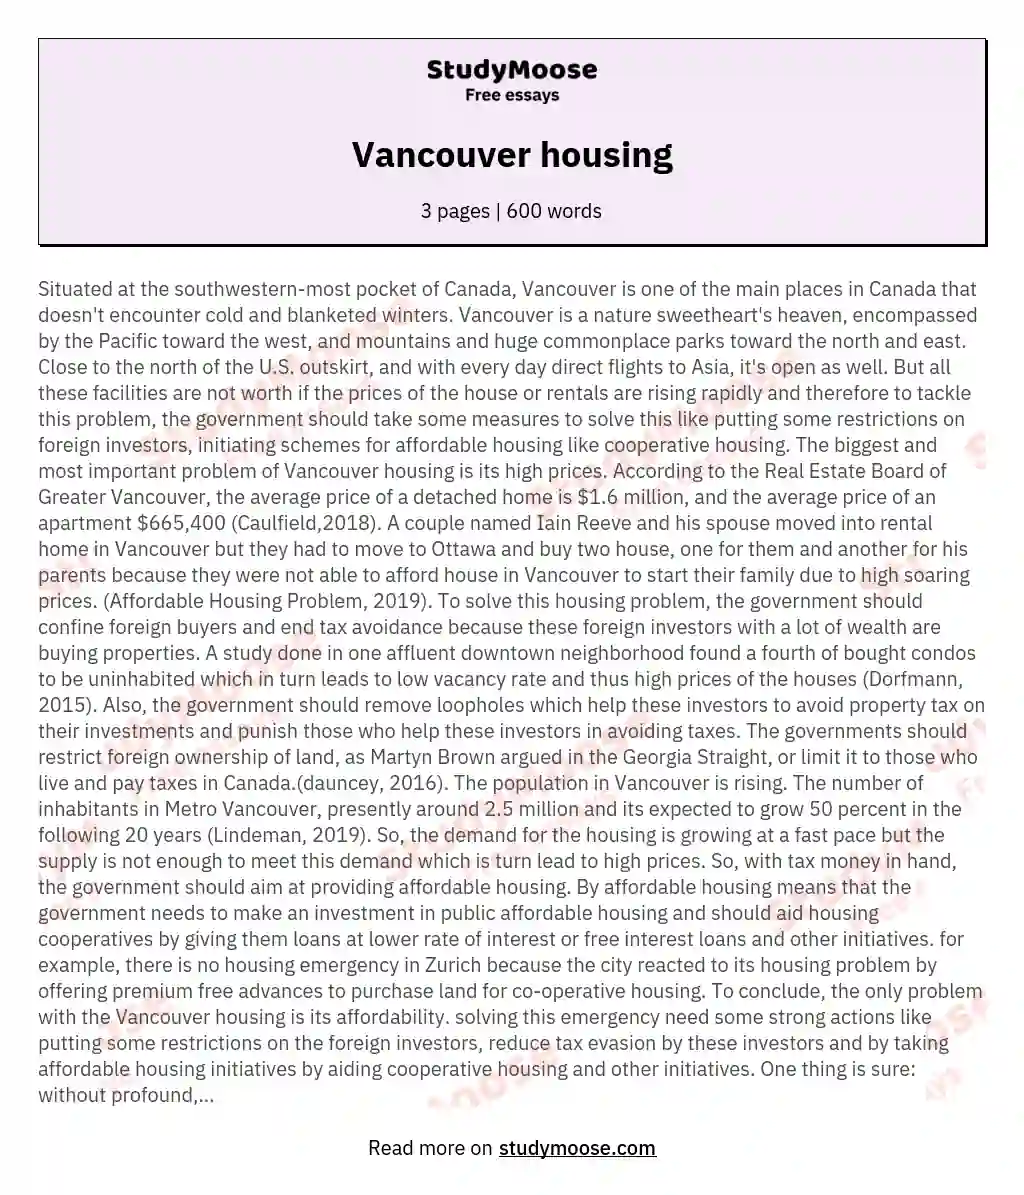 Vancouver housing essay